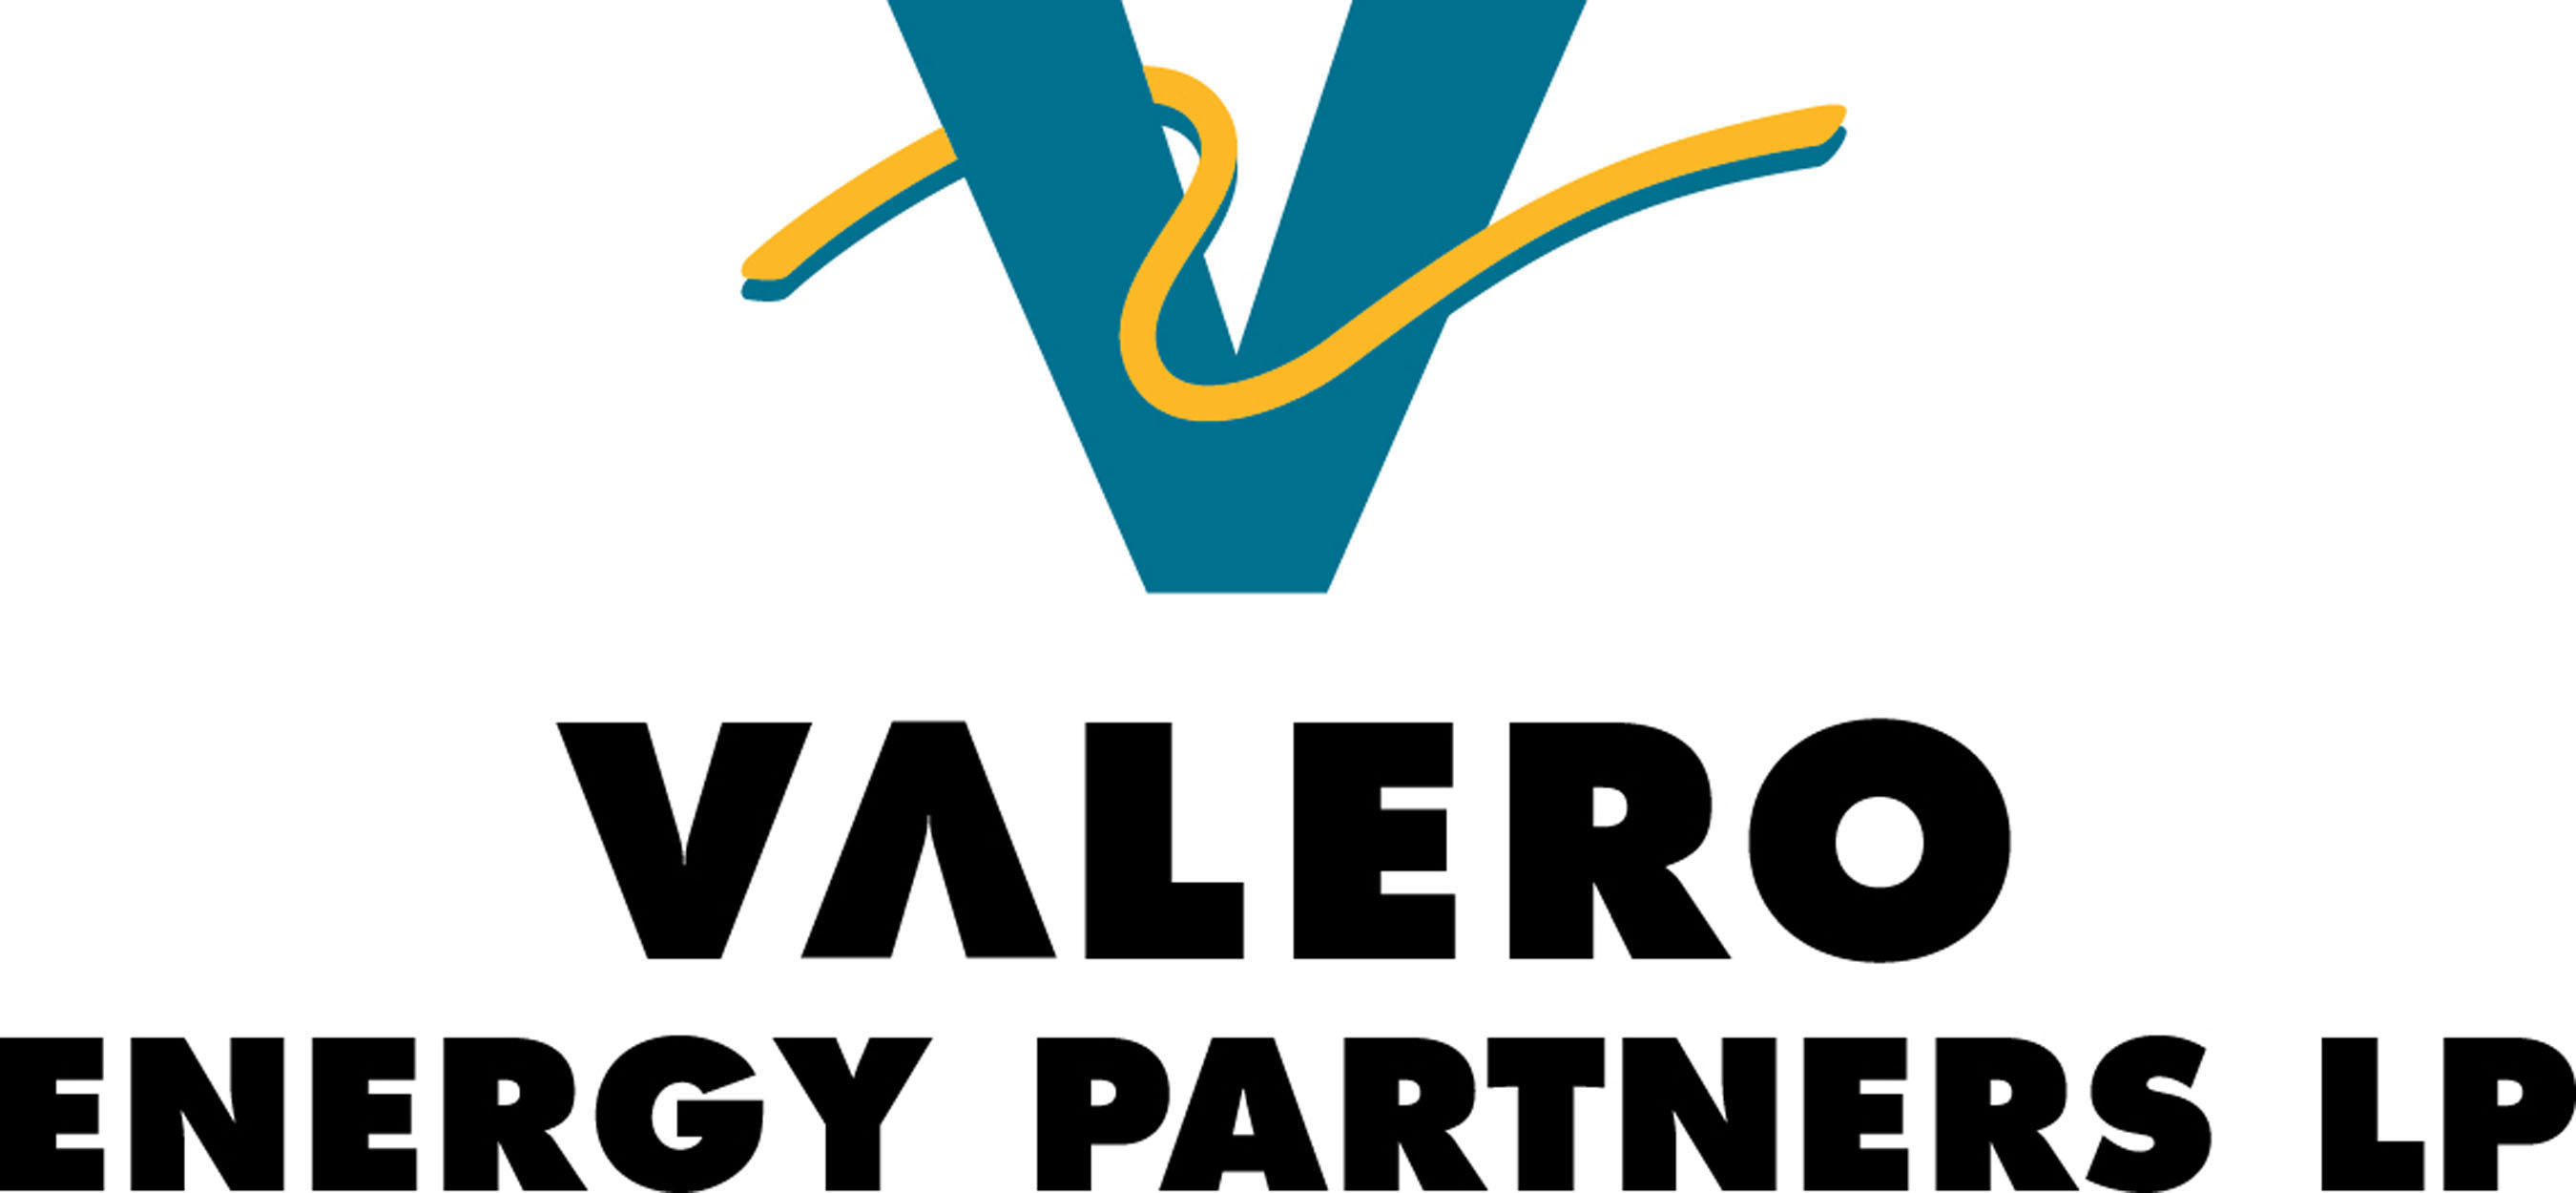 Valero Energy Partners LP Launches Initial Public Offering. (PRNewsFoto/Valero Energy Partners LP) (PRNewsFoto/VALERO ENERGY PARTNERS LP)